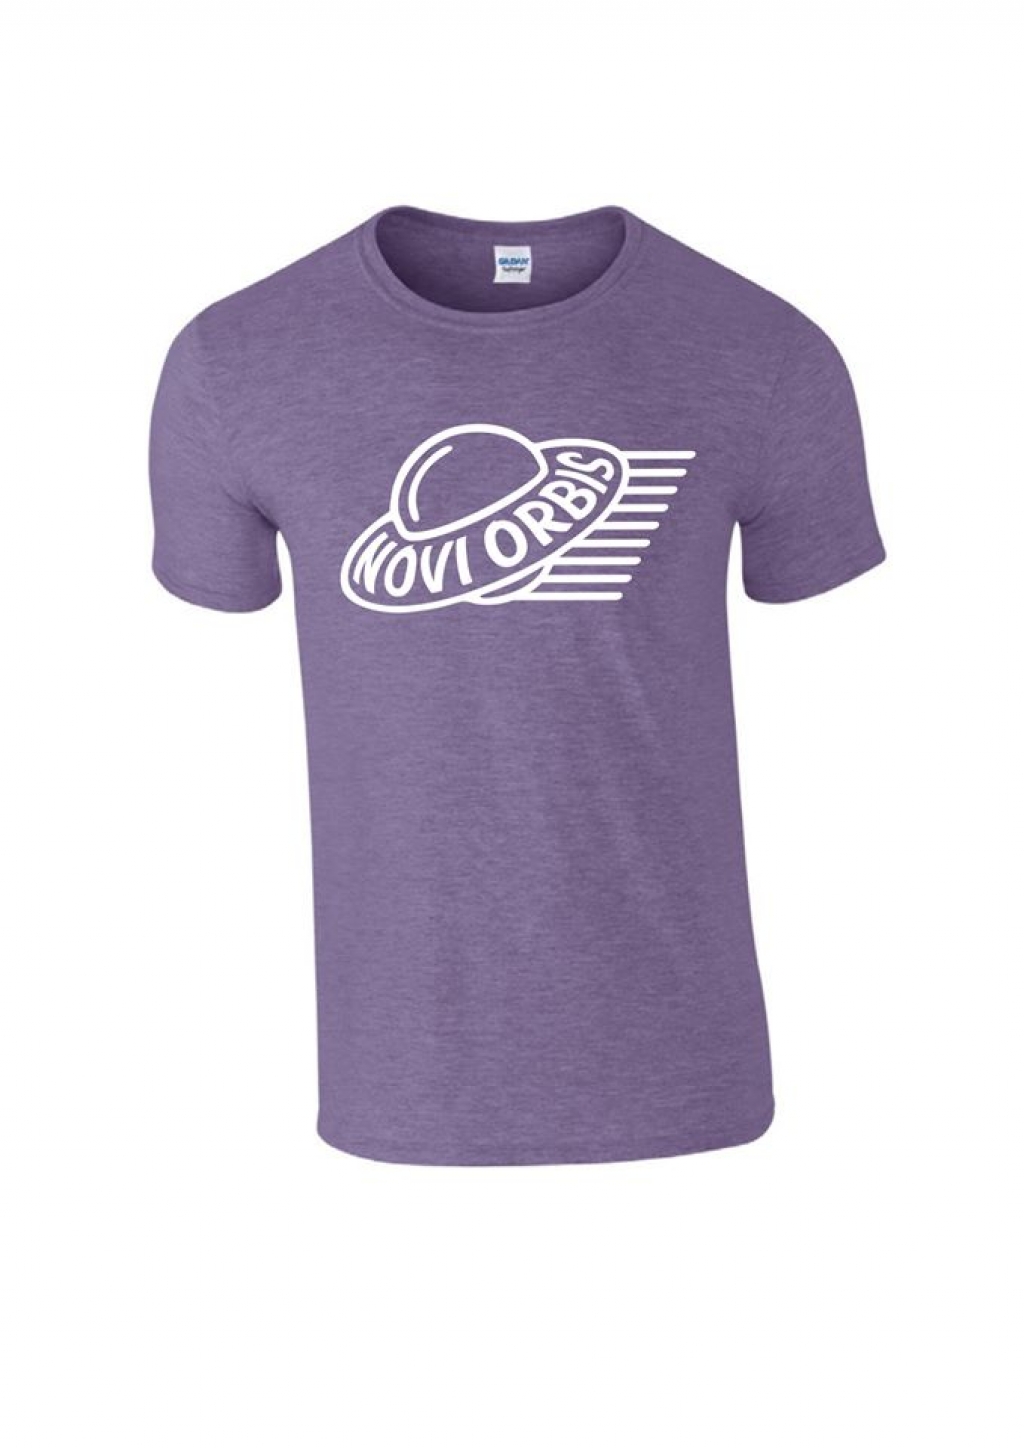 T-Shirt Novi Orbis - Size S /  GL64000 purple melange with white stamp